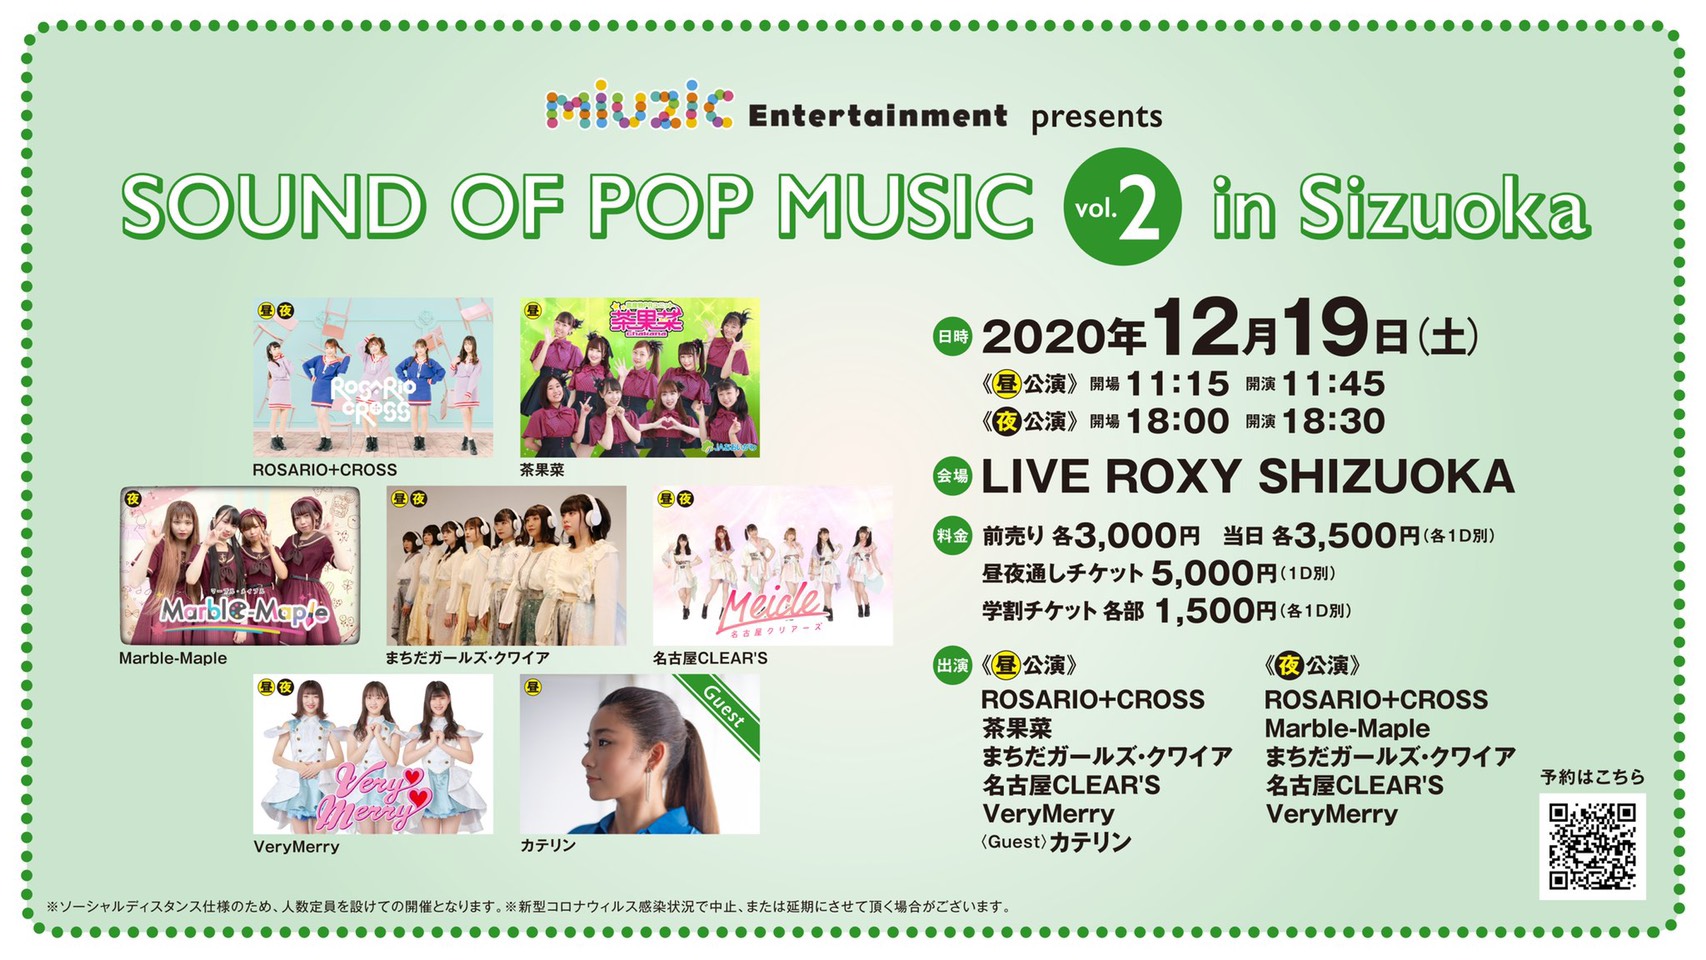 miuzic Entertainment presents 「SOUND OF POP MUSIC vol.2 in Shizuoka」